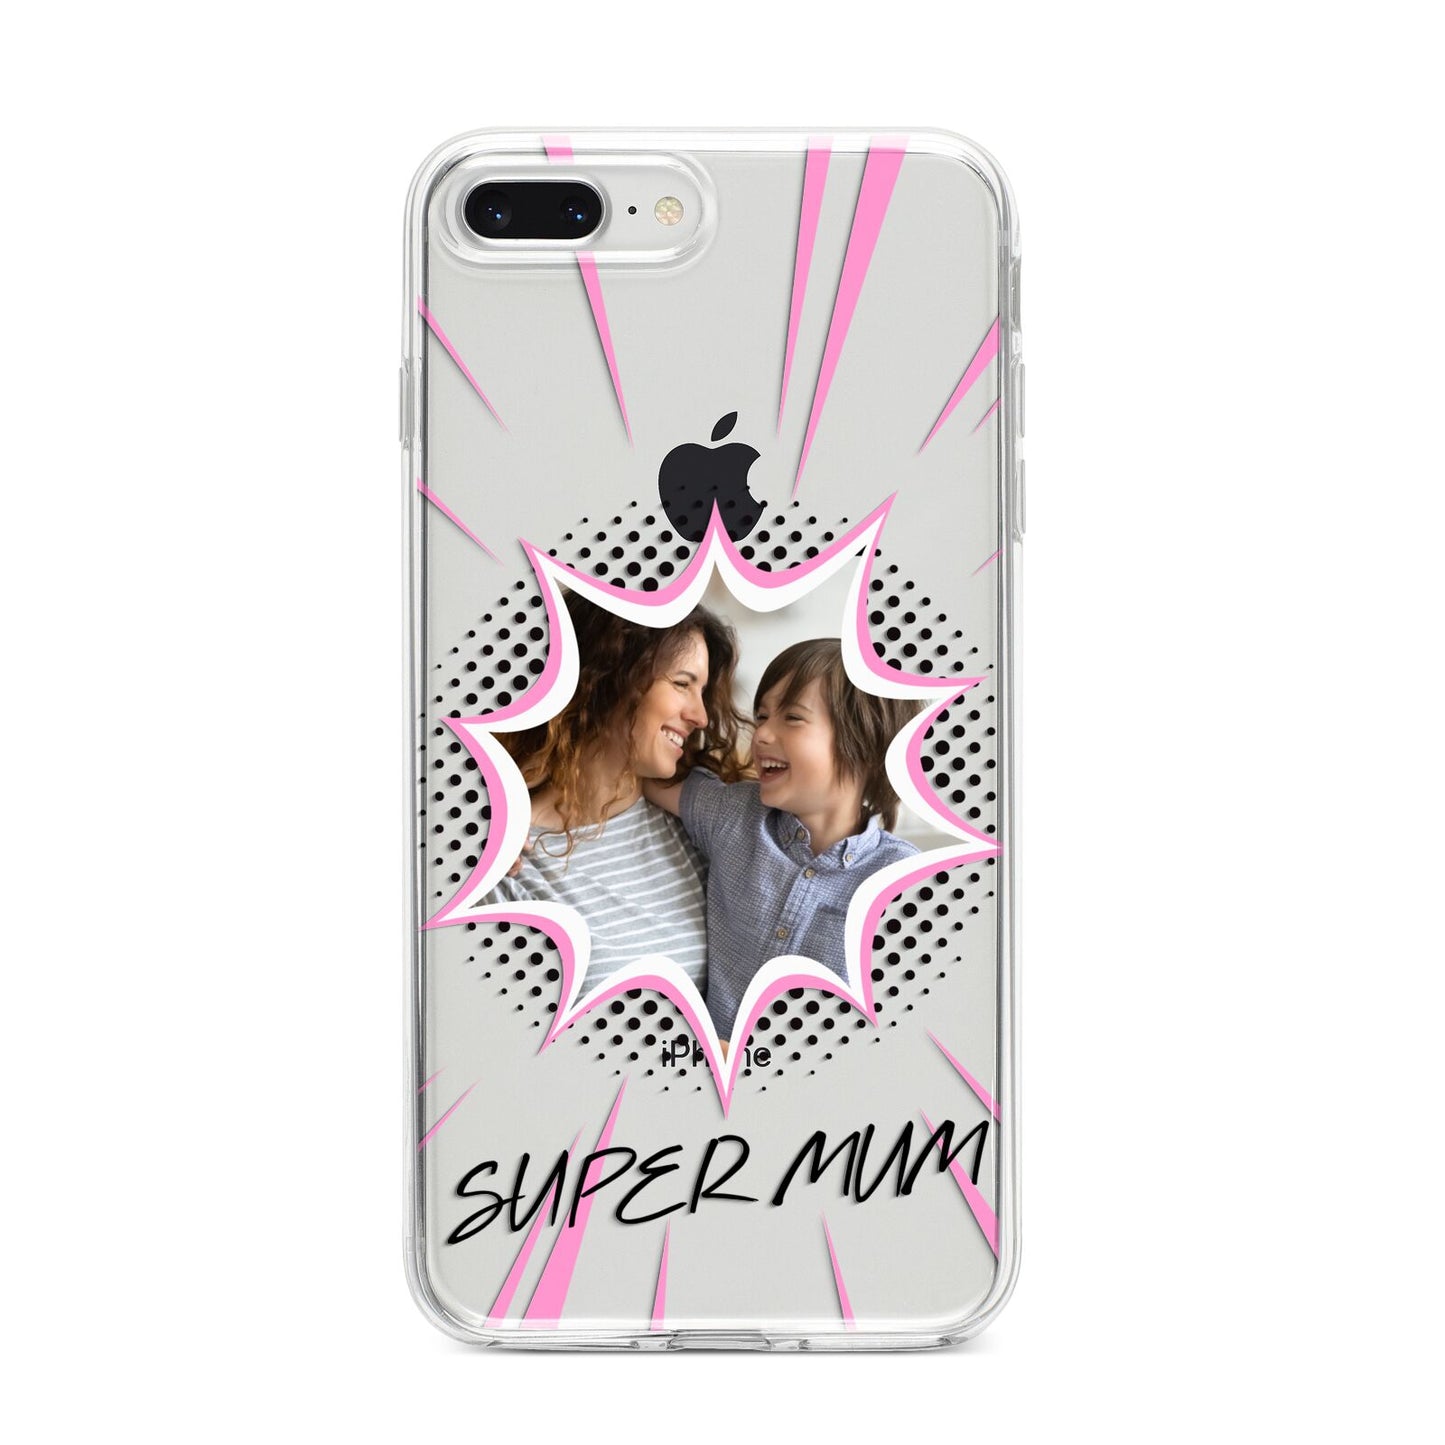 Super Mum Photo iPhone 8 Plus Bumper Case on Silver iPhone